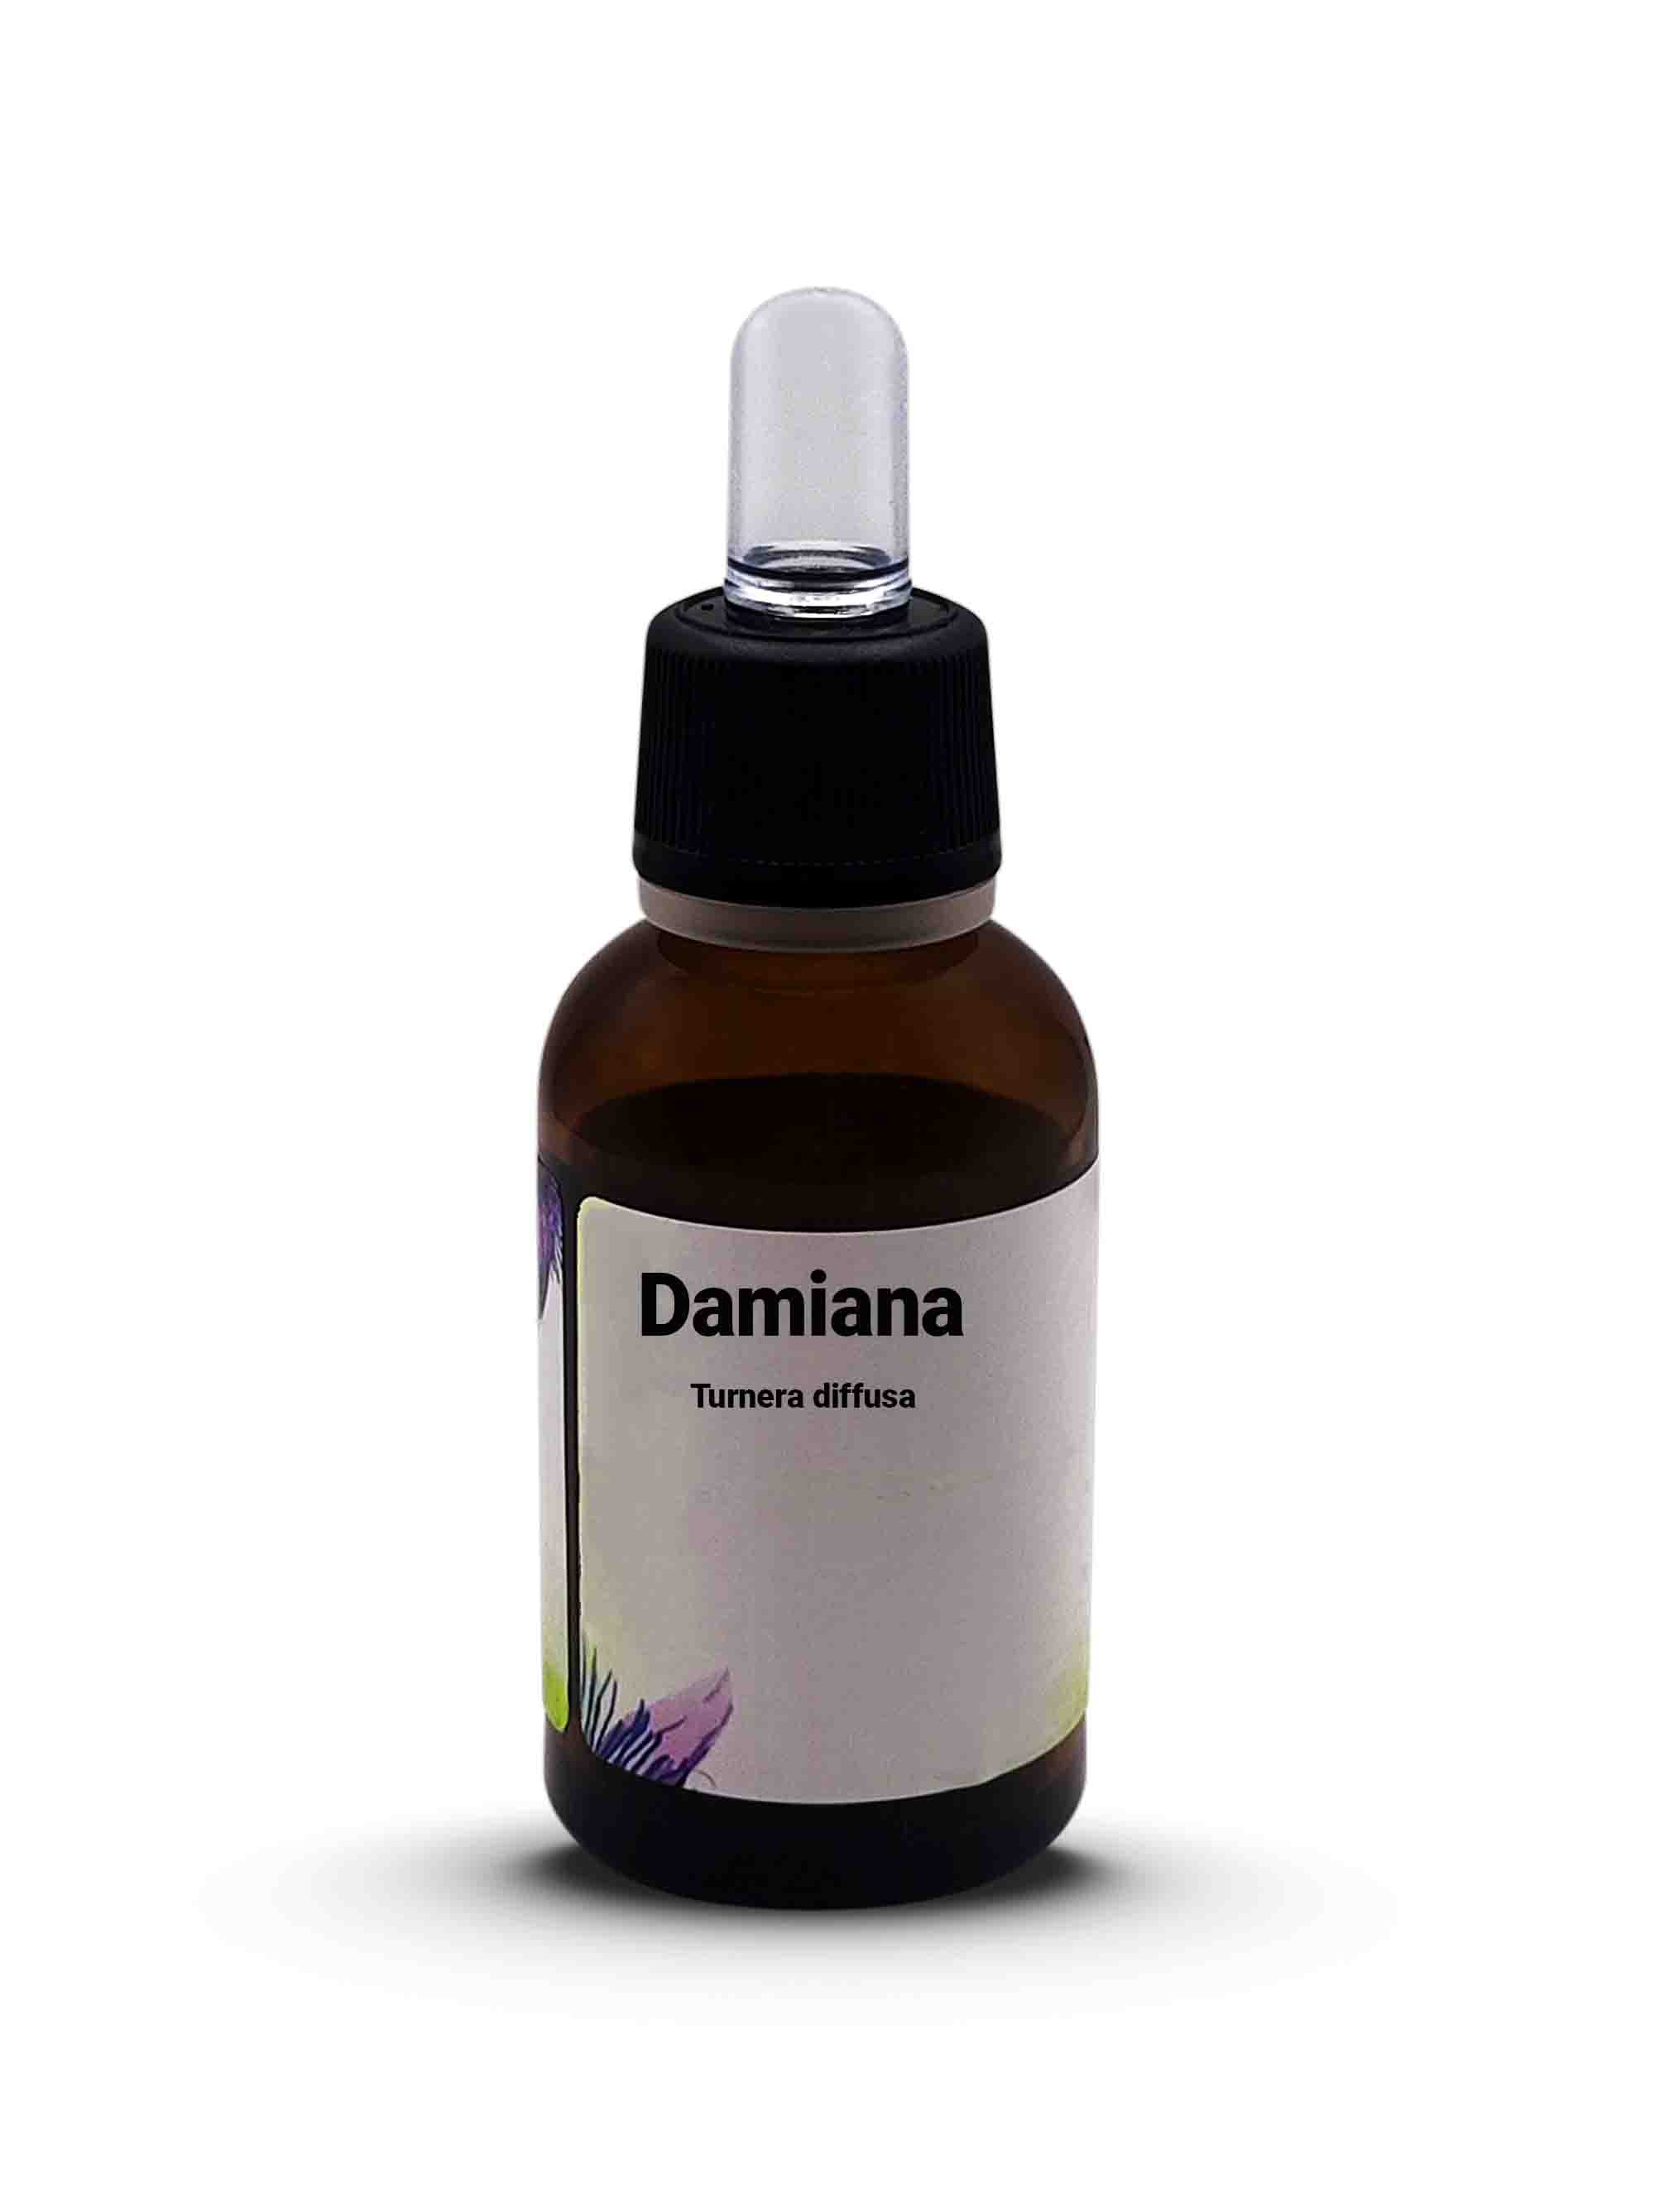 Damiana - Turnera diffusa 30 ml